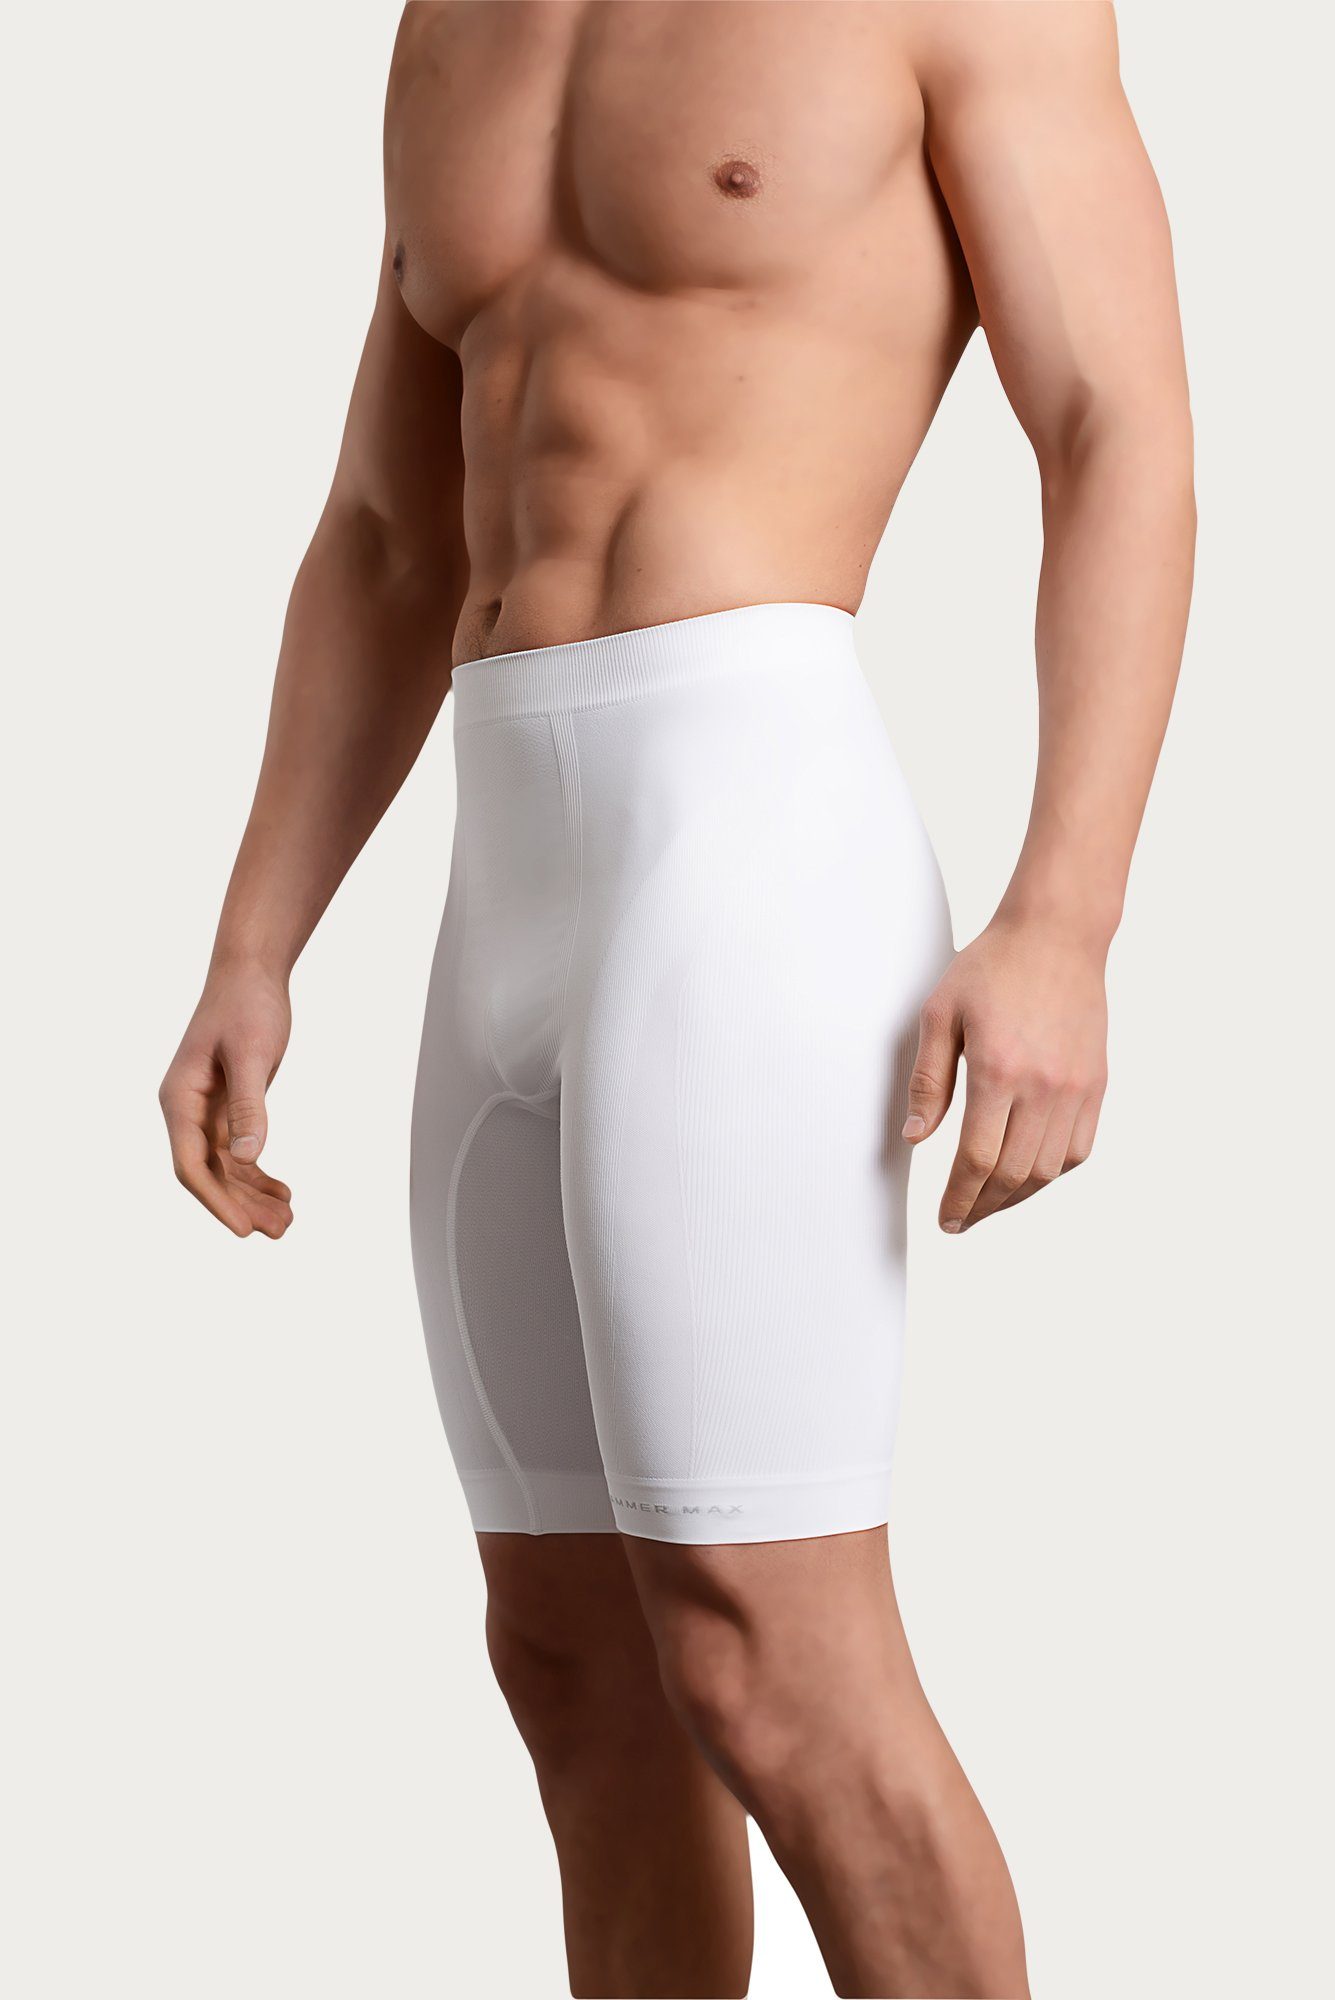 Weiß Performance® Max Shorts Trainingsshorts atmungsaktives Tech Gewebe Shapewear, Compression High Strammer